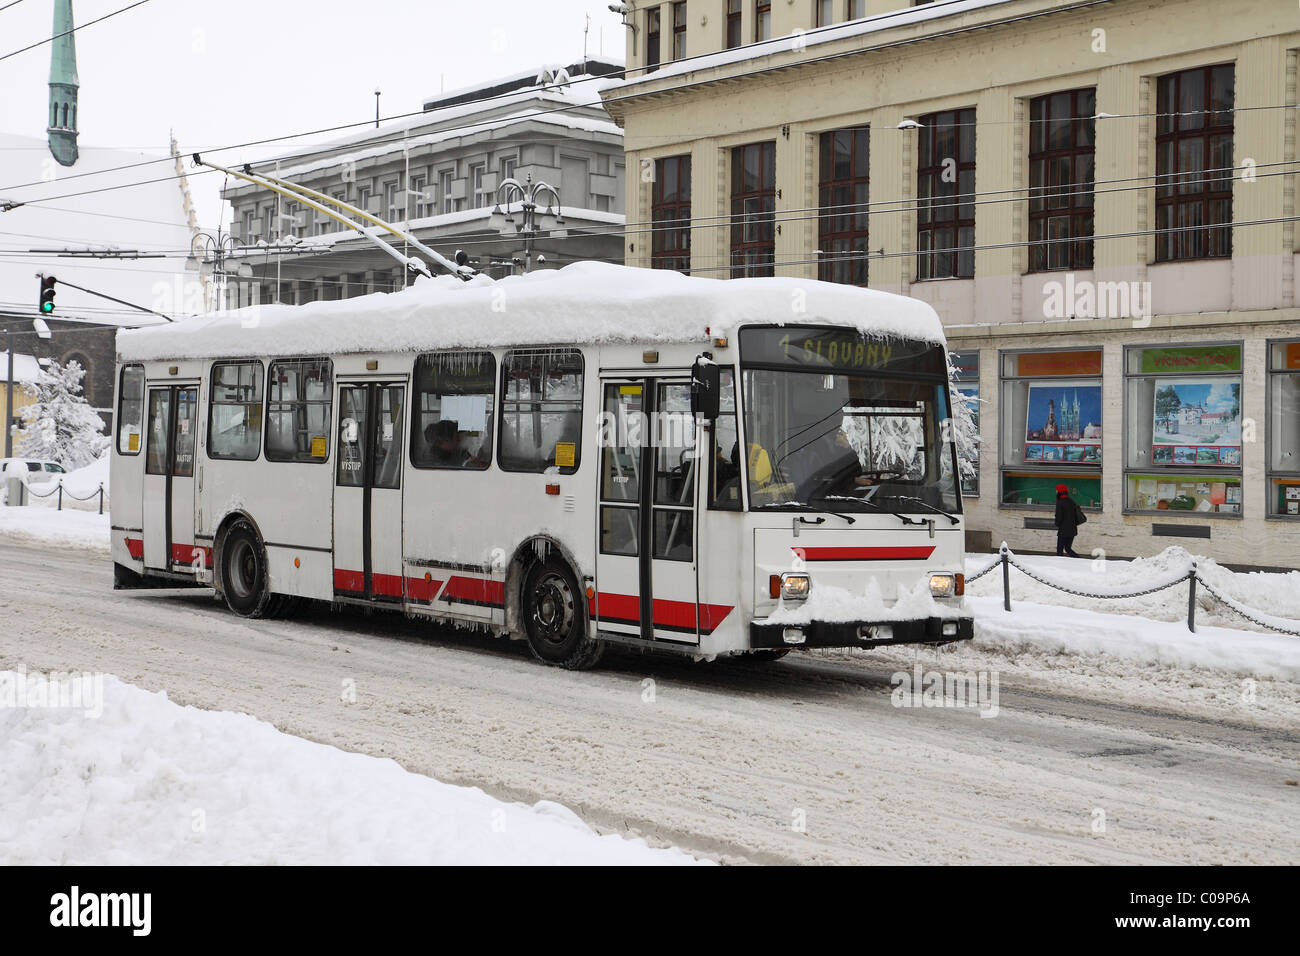 Czech Republic - city Pardubice, square Namesti Republiky - trolleybus in winter with snow Stock Photo